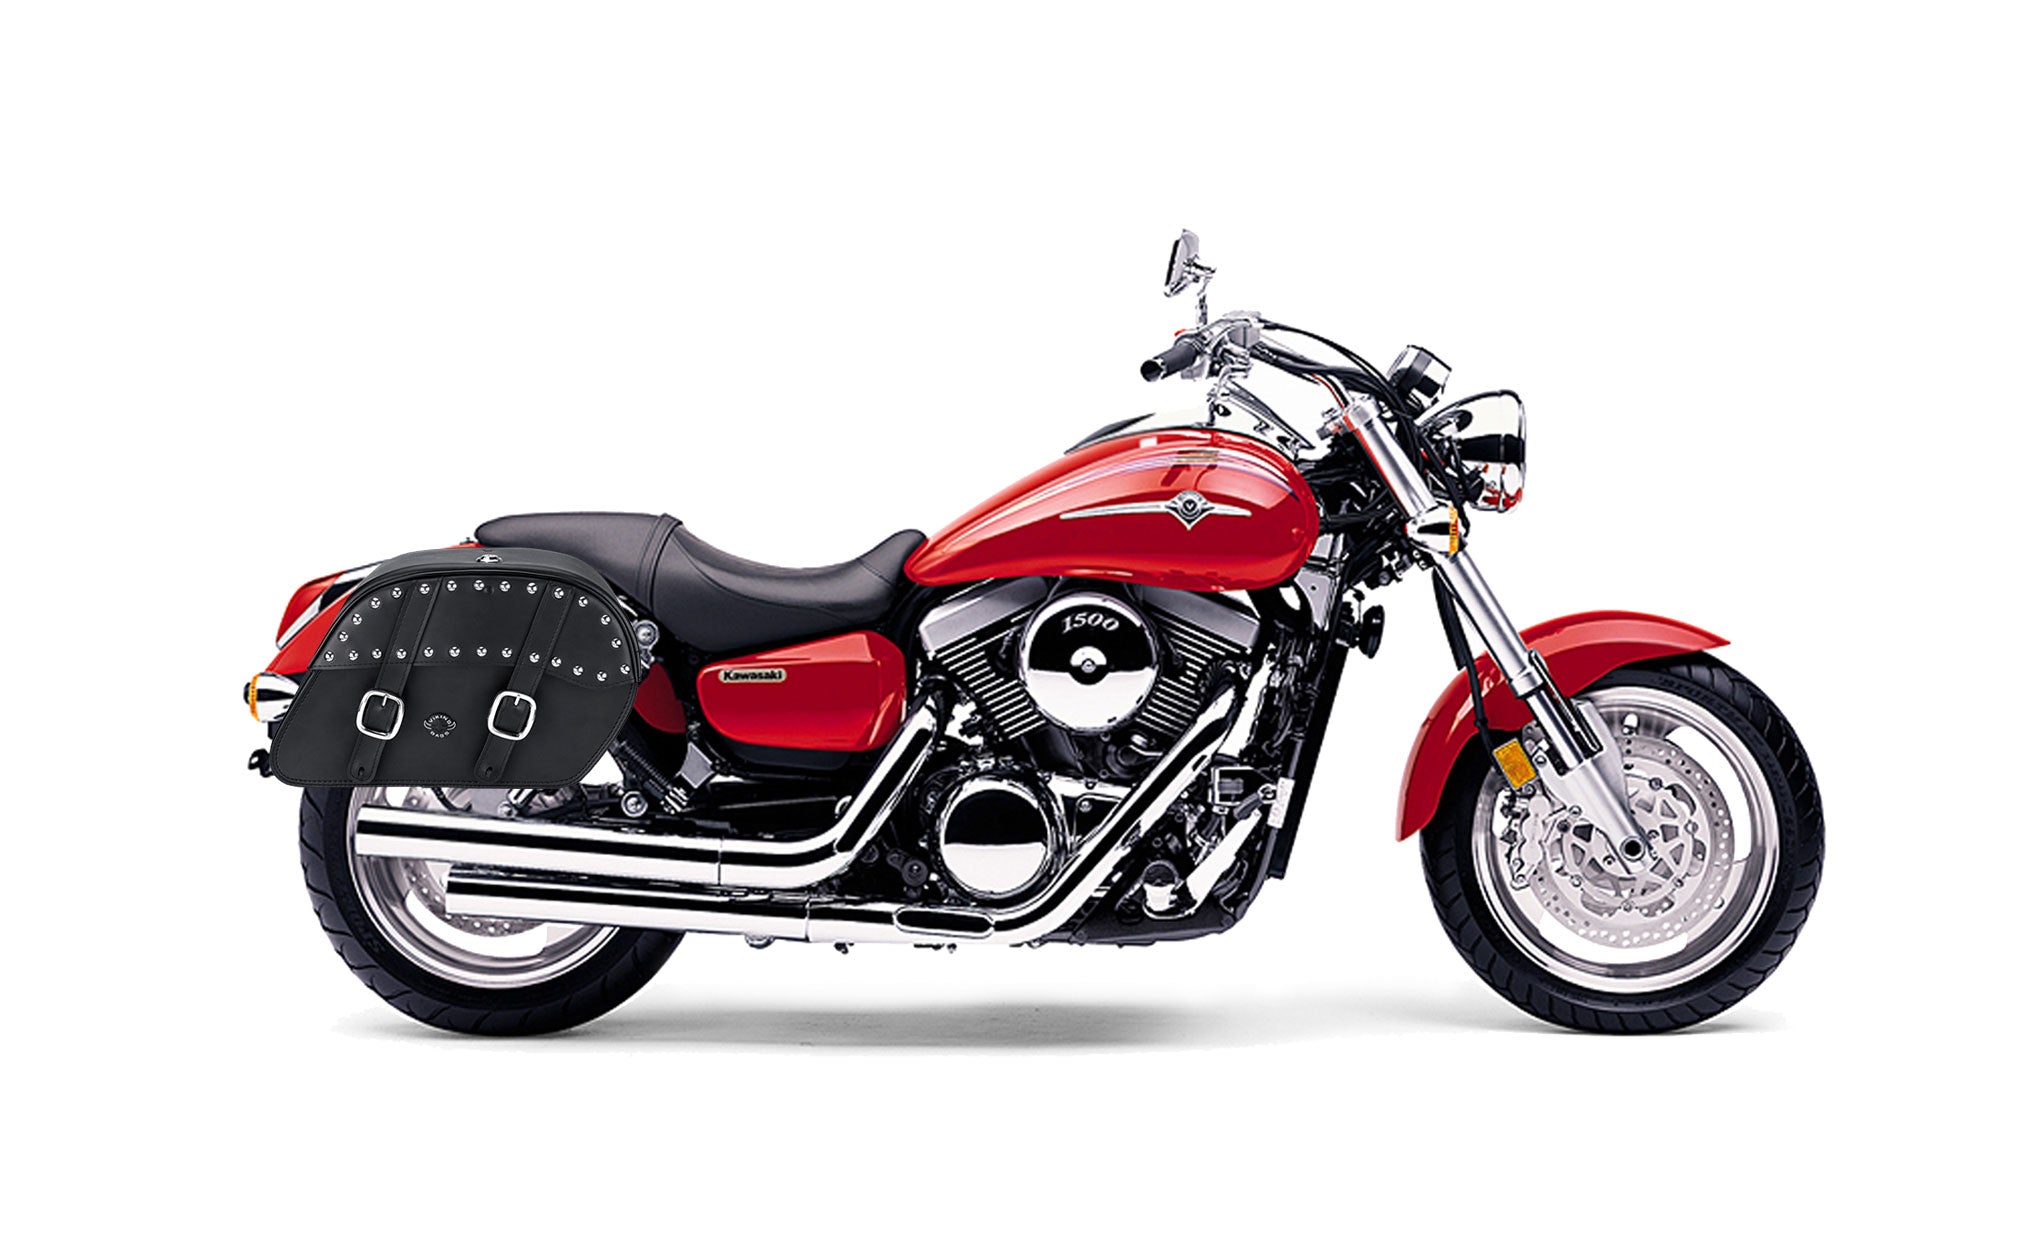 Viking Skarner Large Kawasaki Mean Streak 1500 Leather Studded Motorcycle Saddlebags on Bike Photo @expand